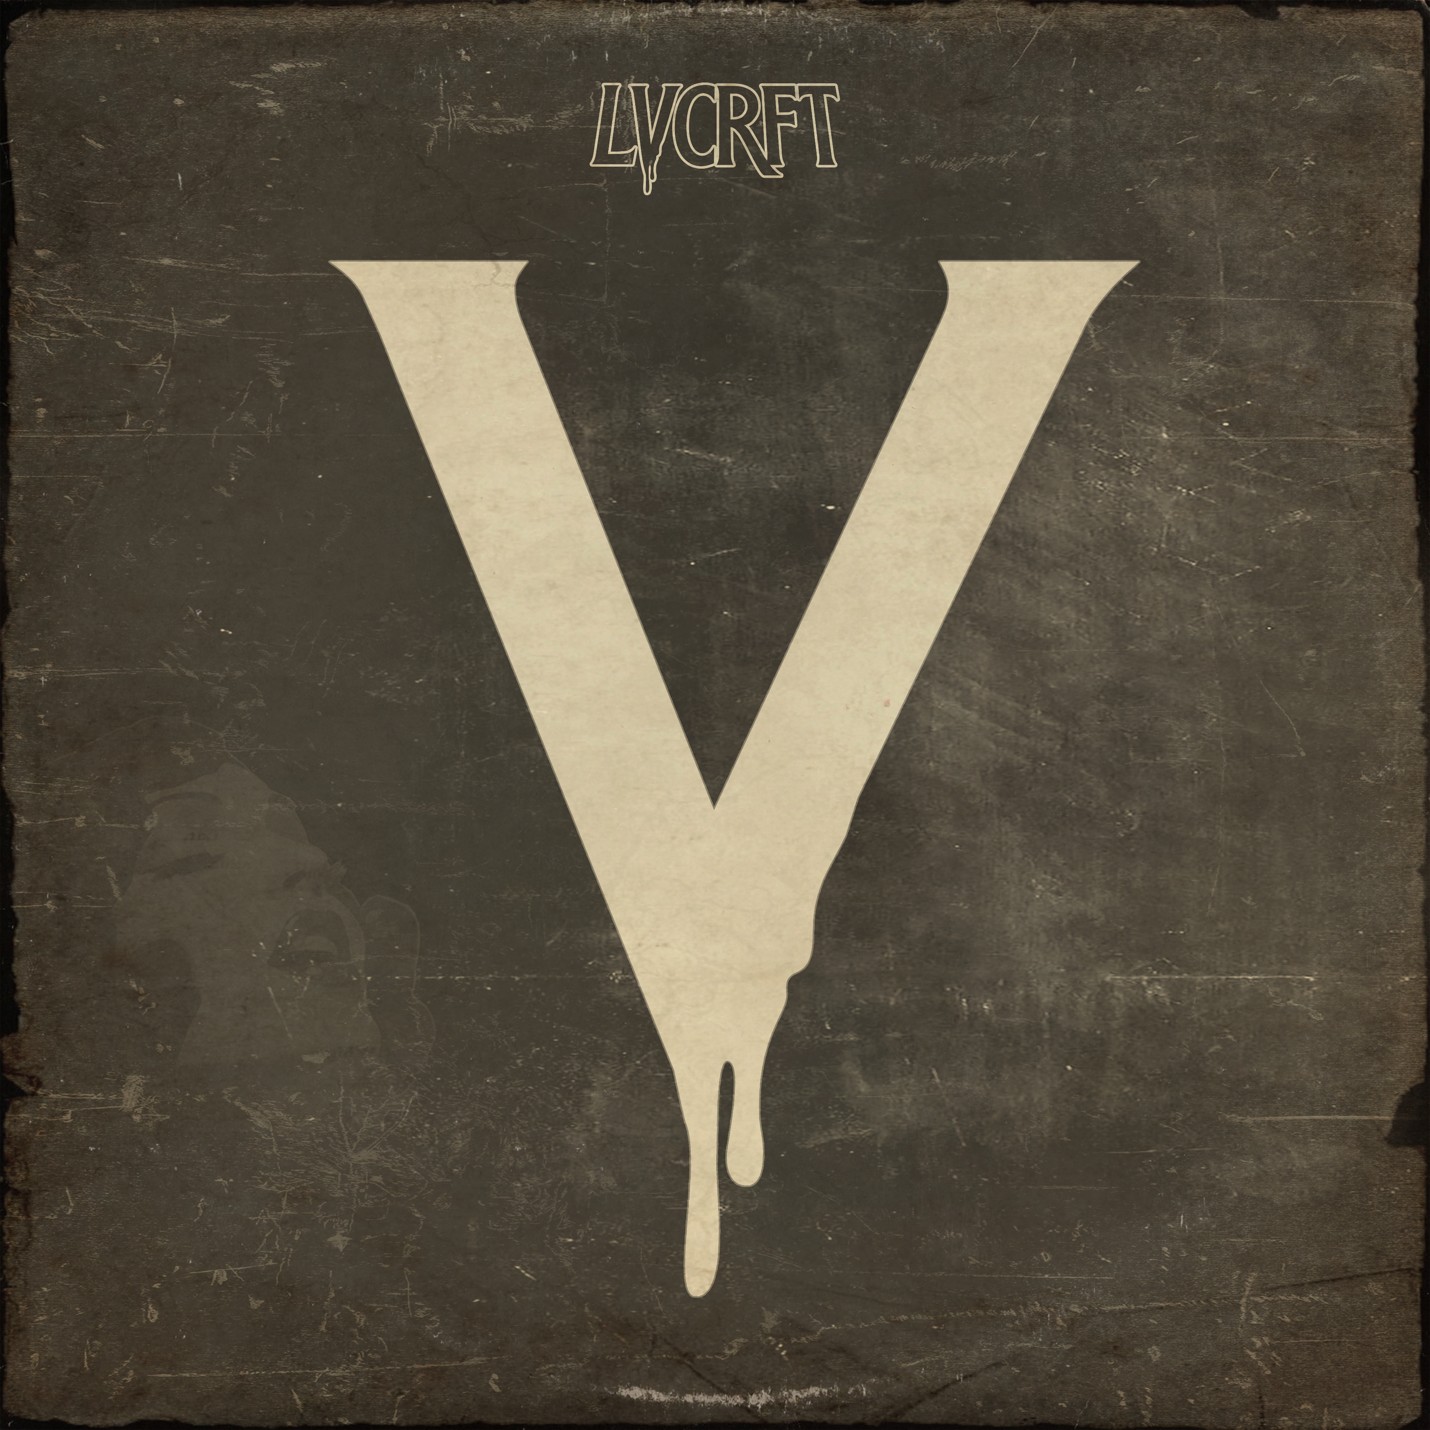 LVCRFT ‘V’ album artwork